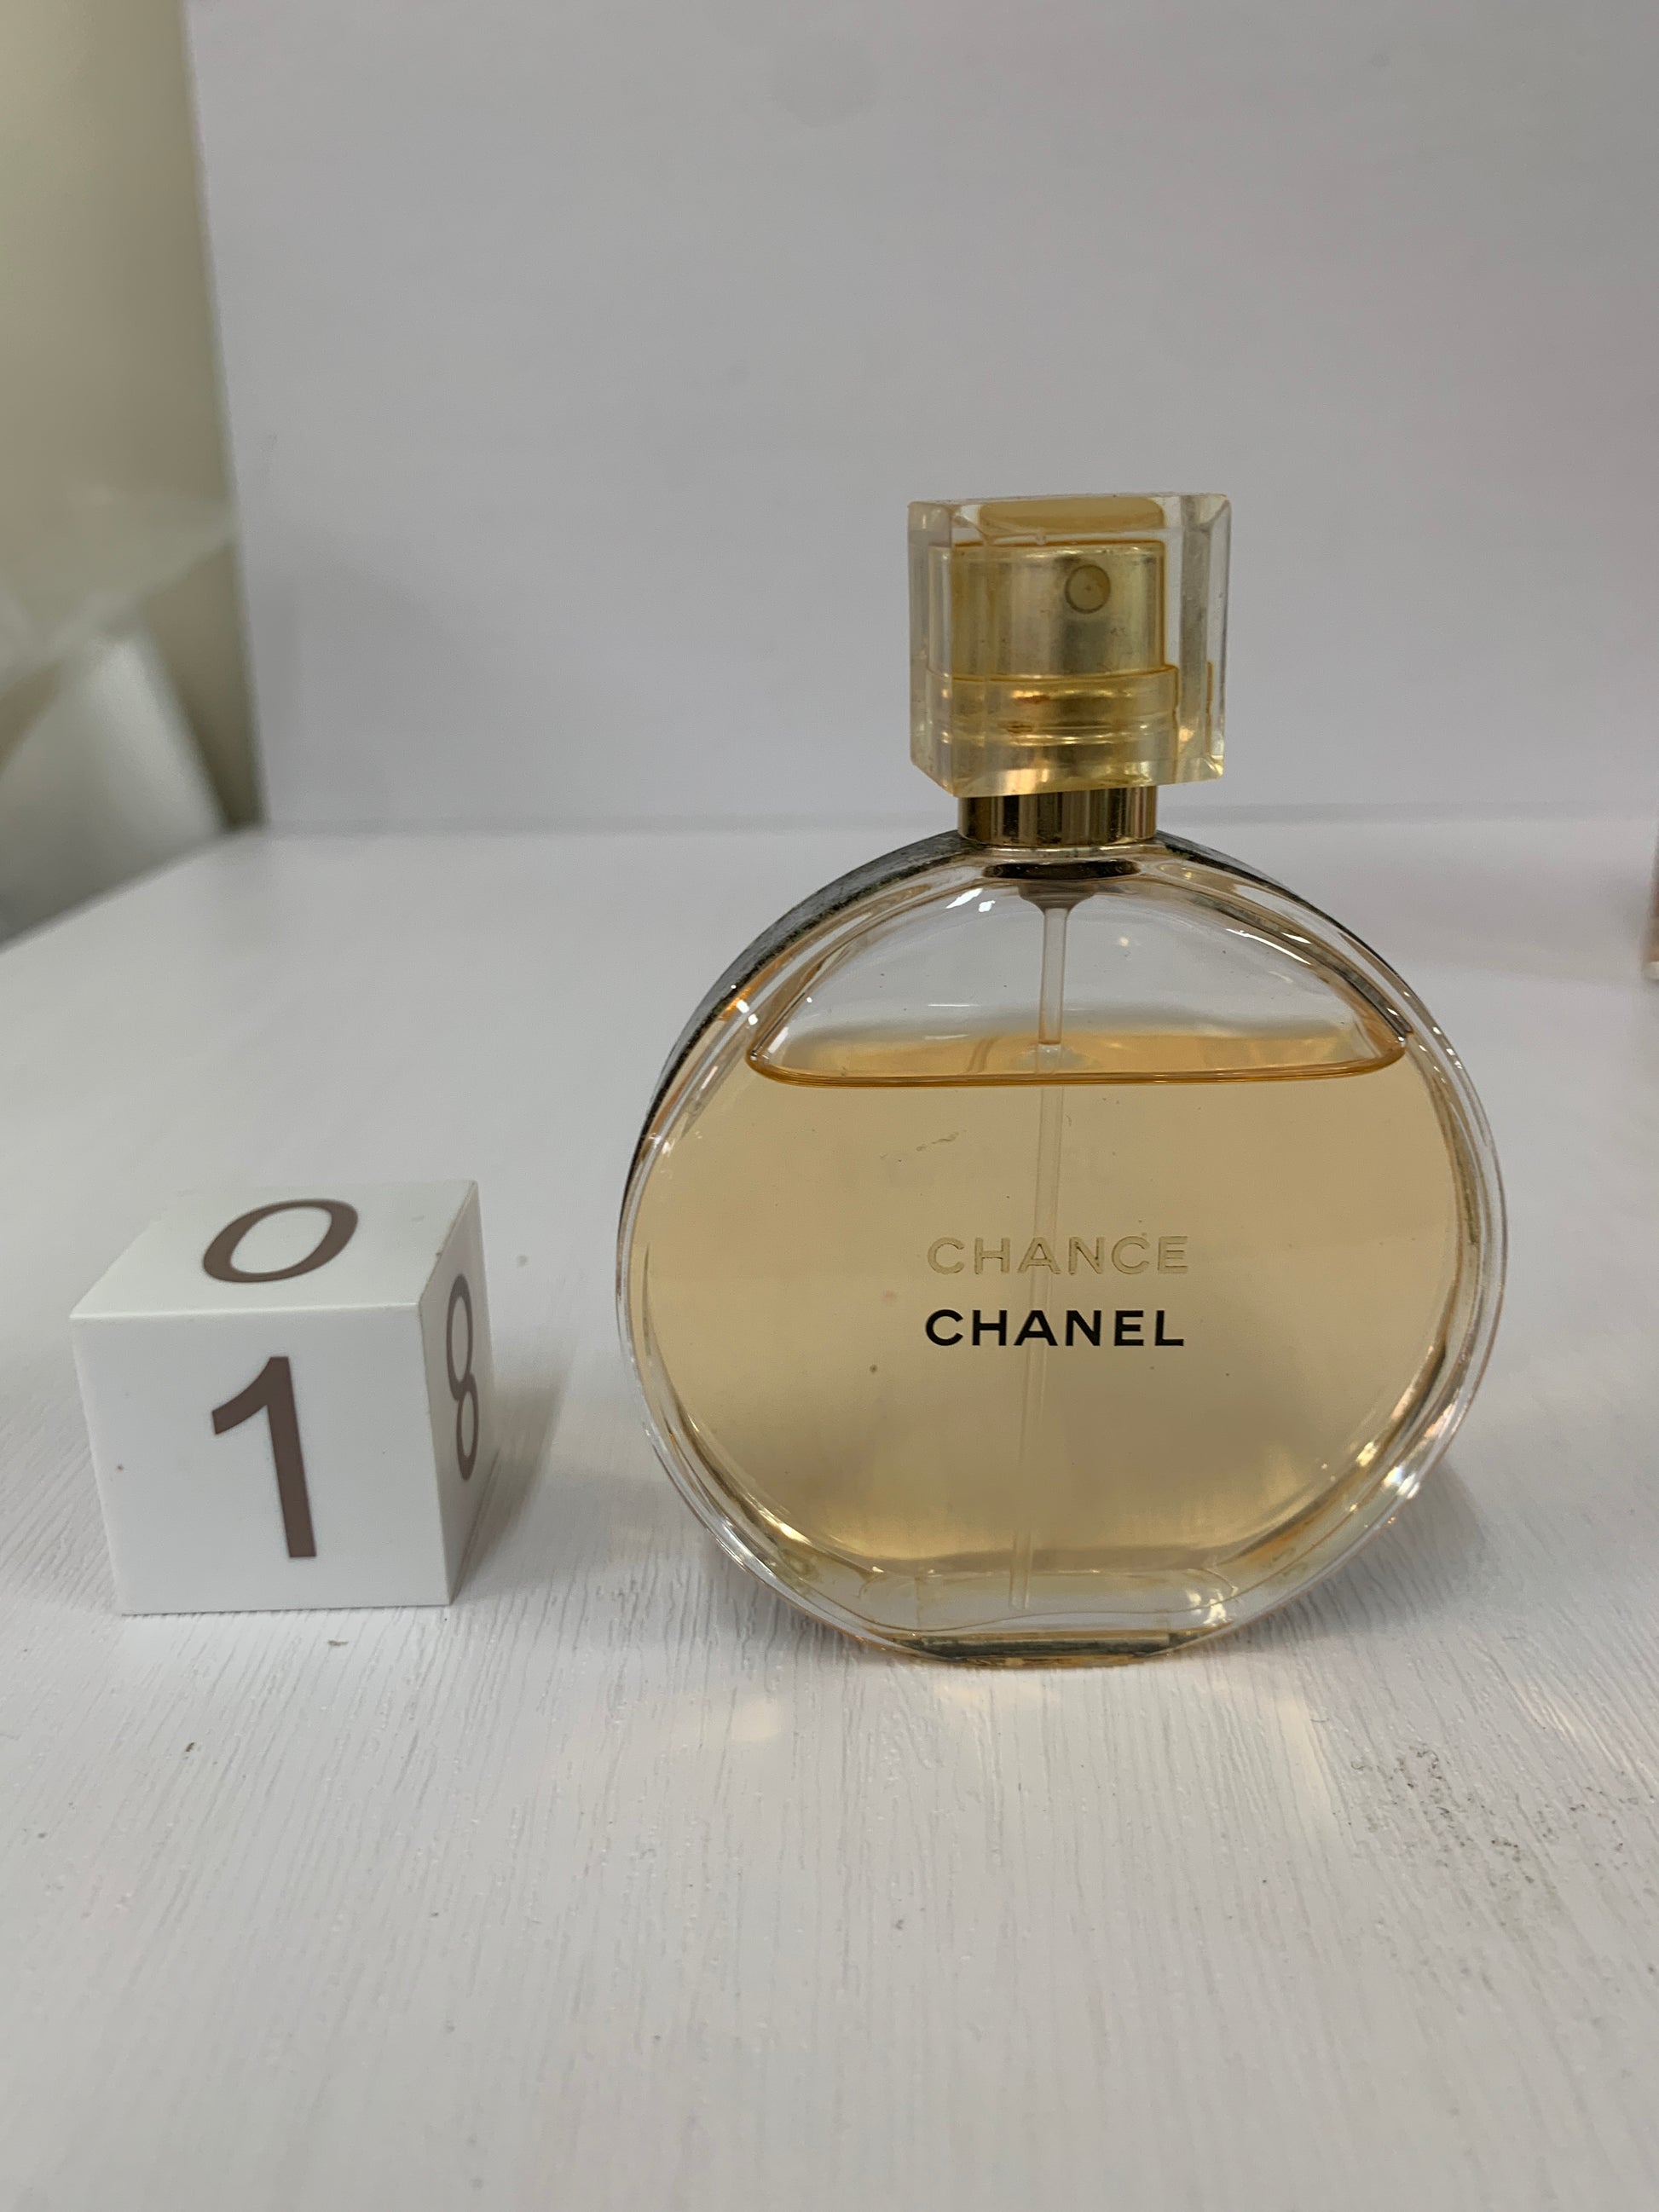 CHANEL Allure Fragrances for Women for sale